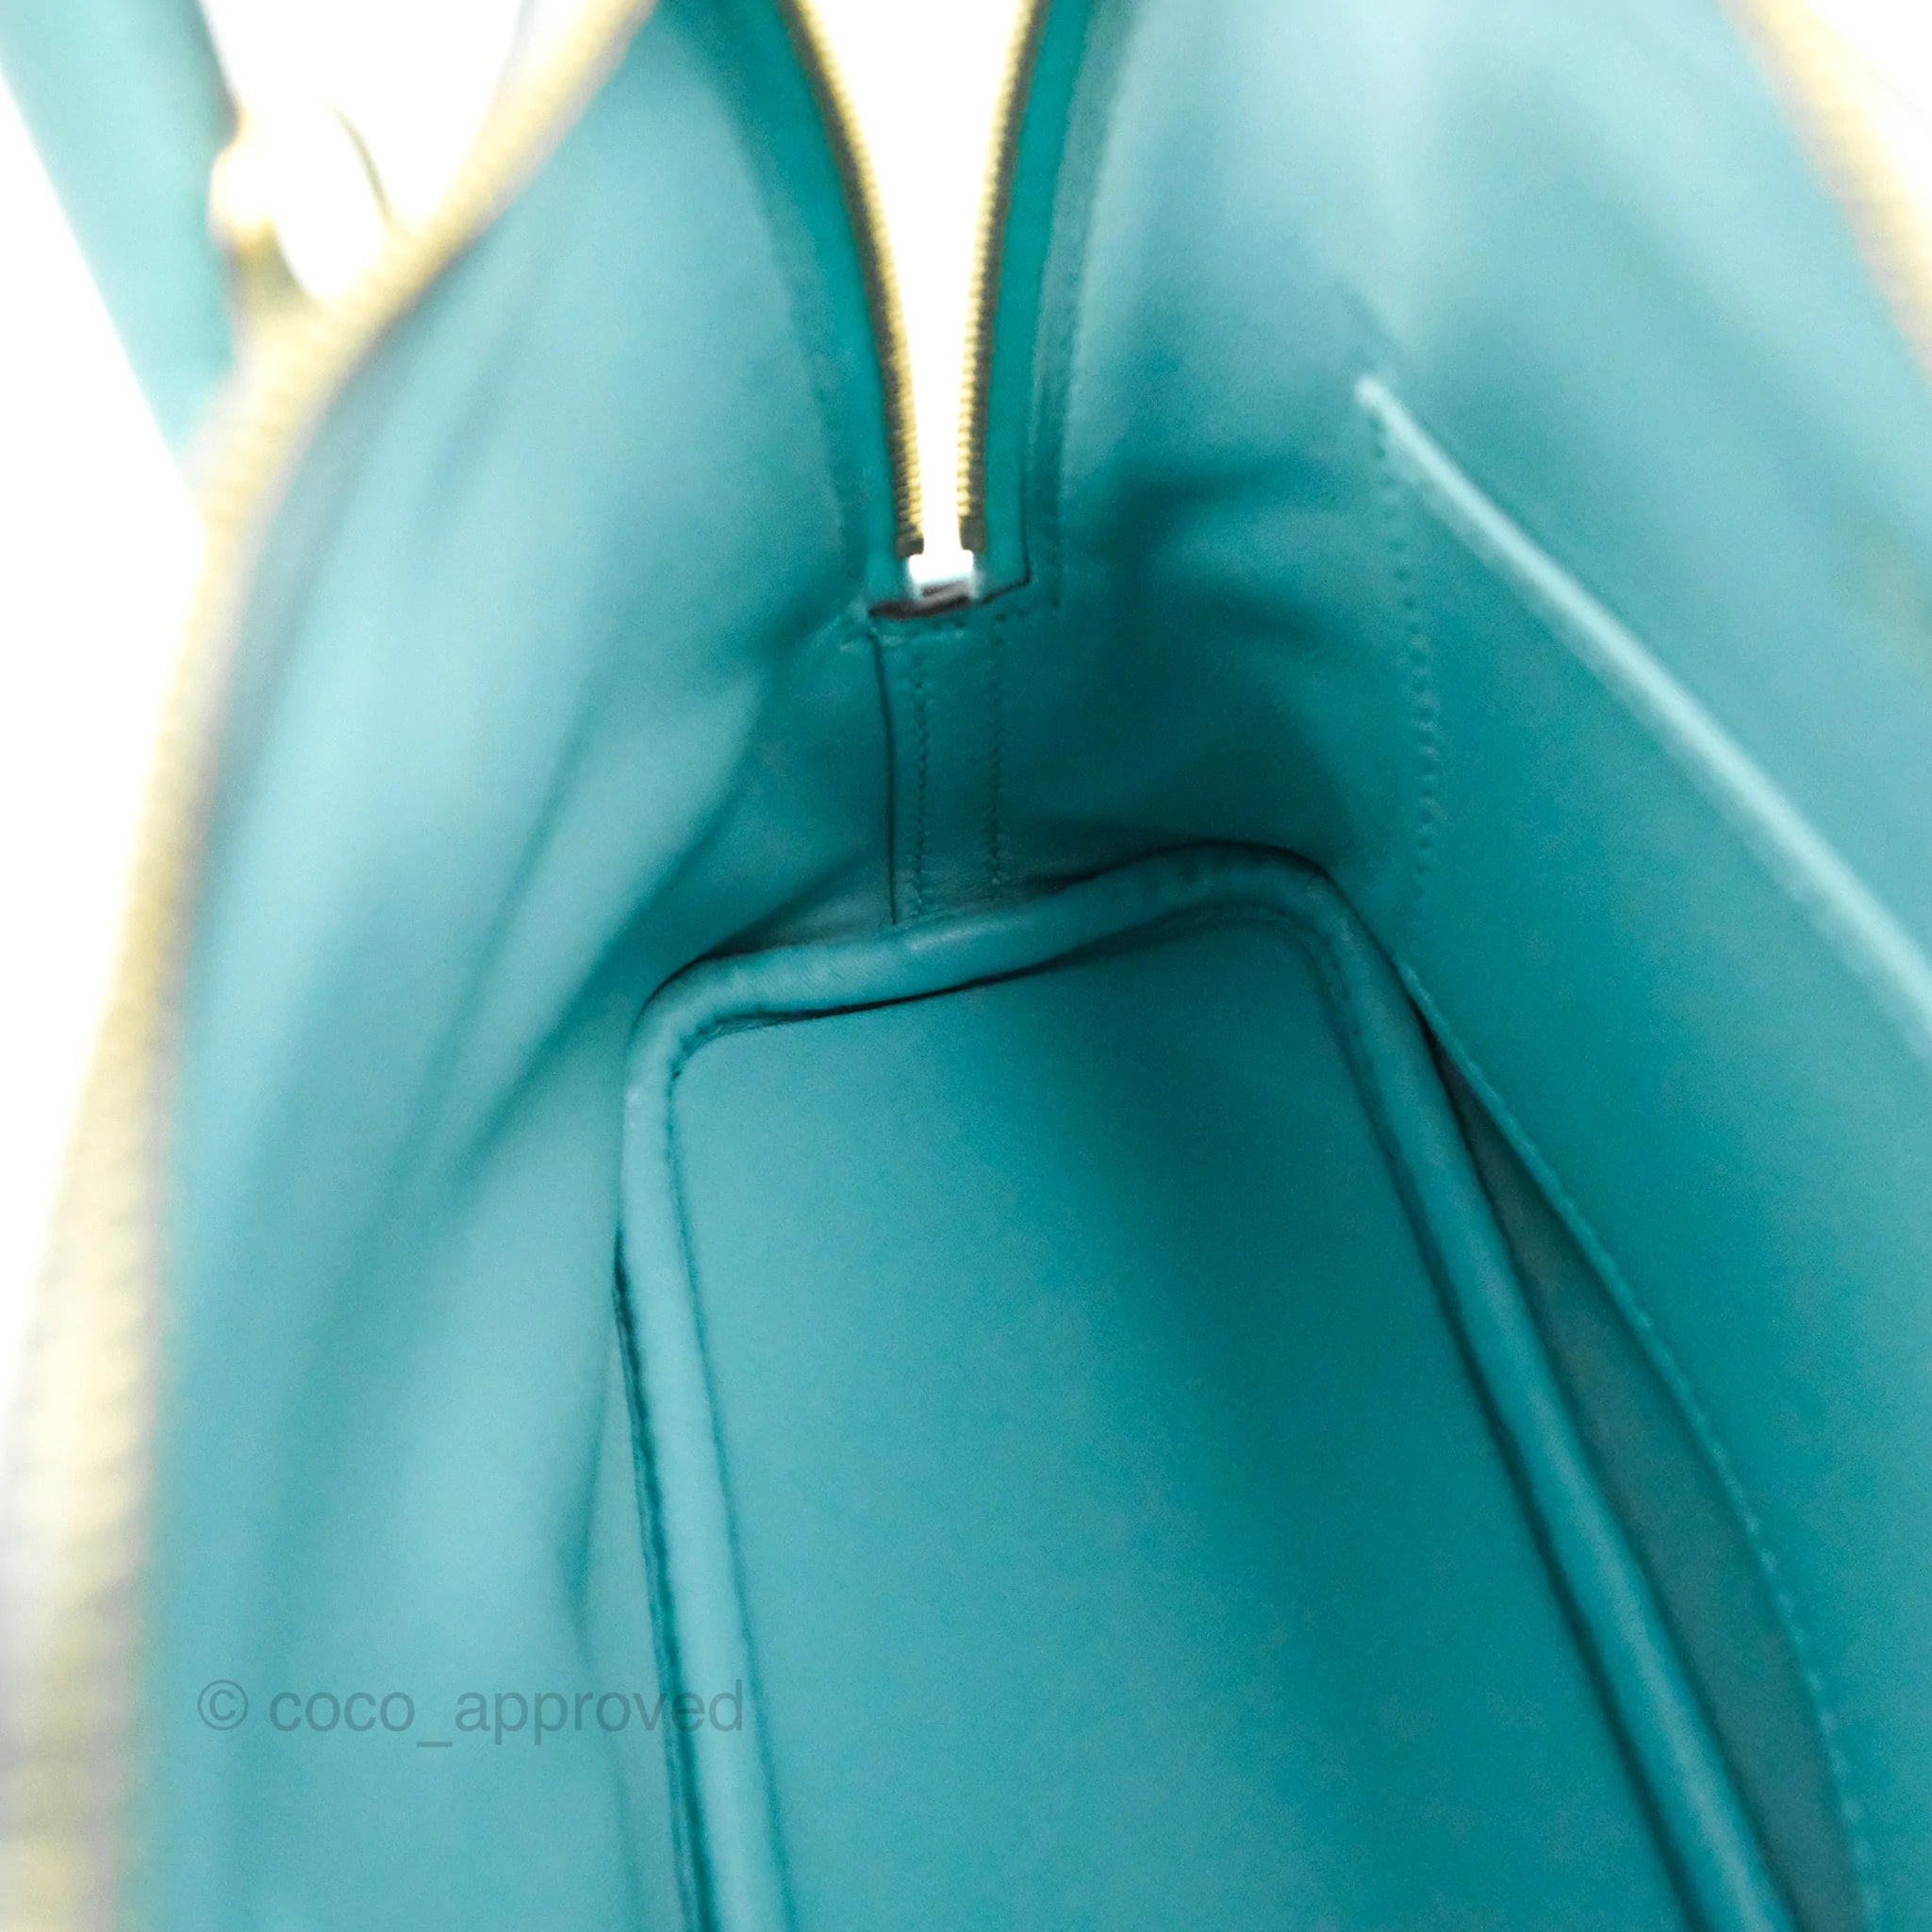 Hermès Berline Sport 21 mini bag in blue atoll PHW - DOWNTOWN